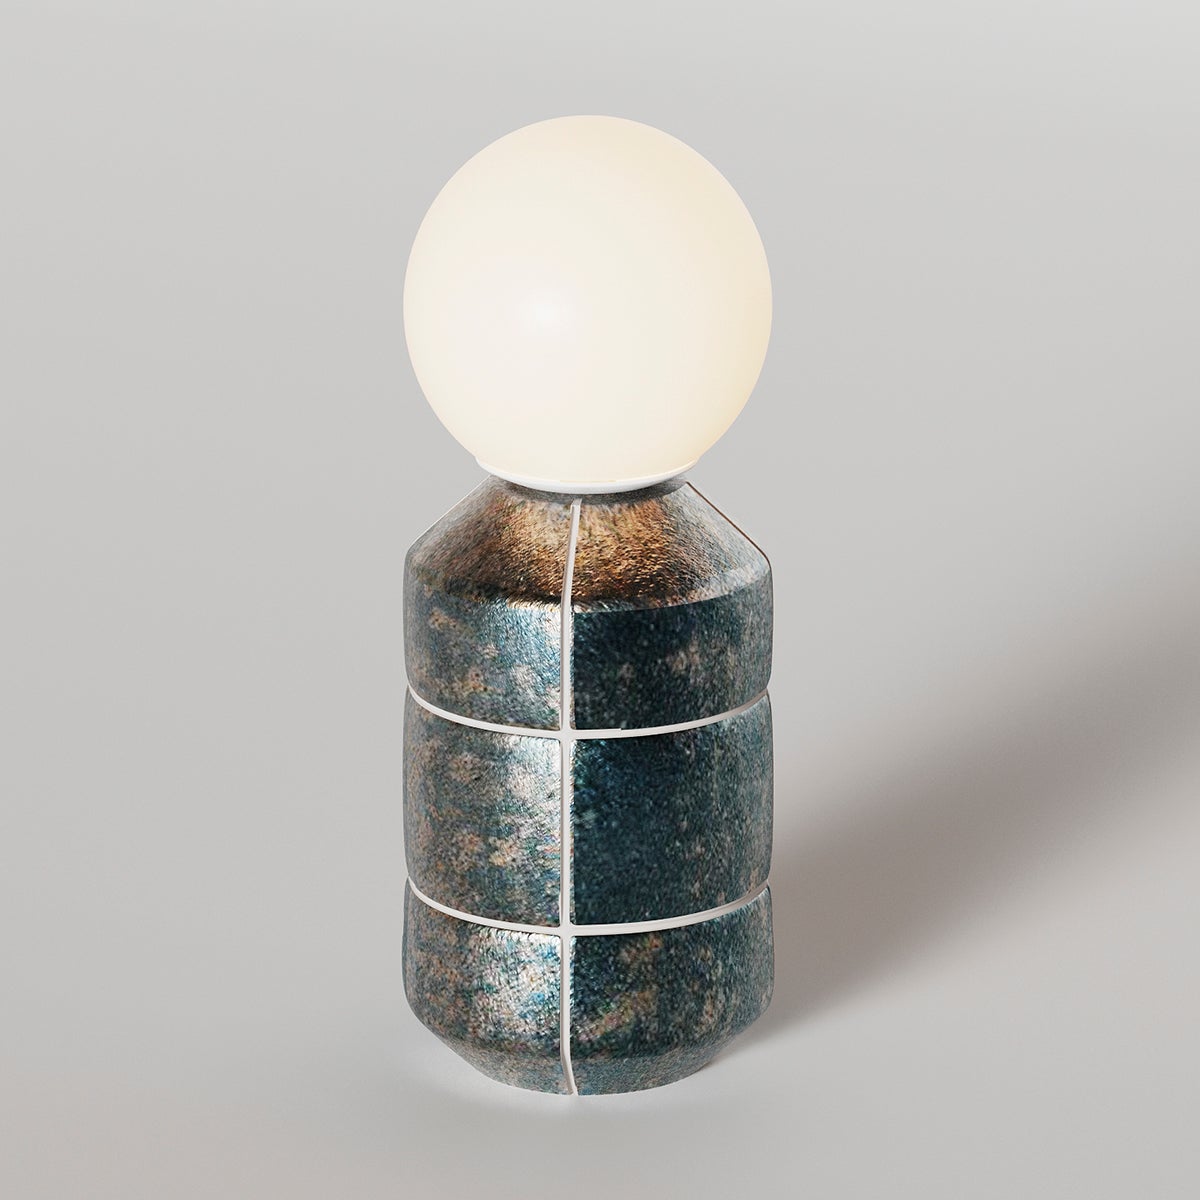 Handmade Handcrafted Ceramic Pottery Table Lamp Artisanal Illumination Lighting For Sale